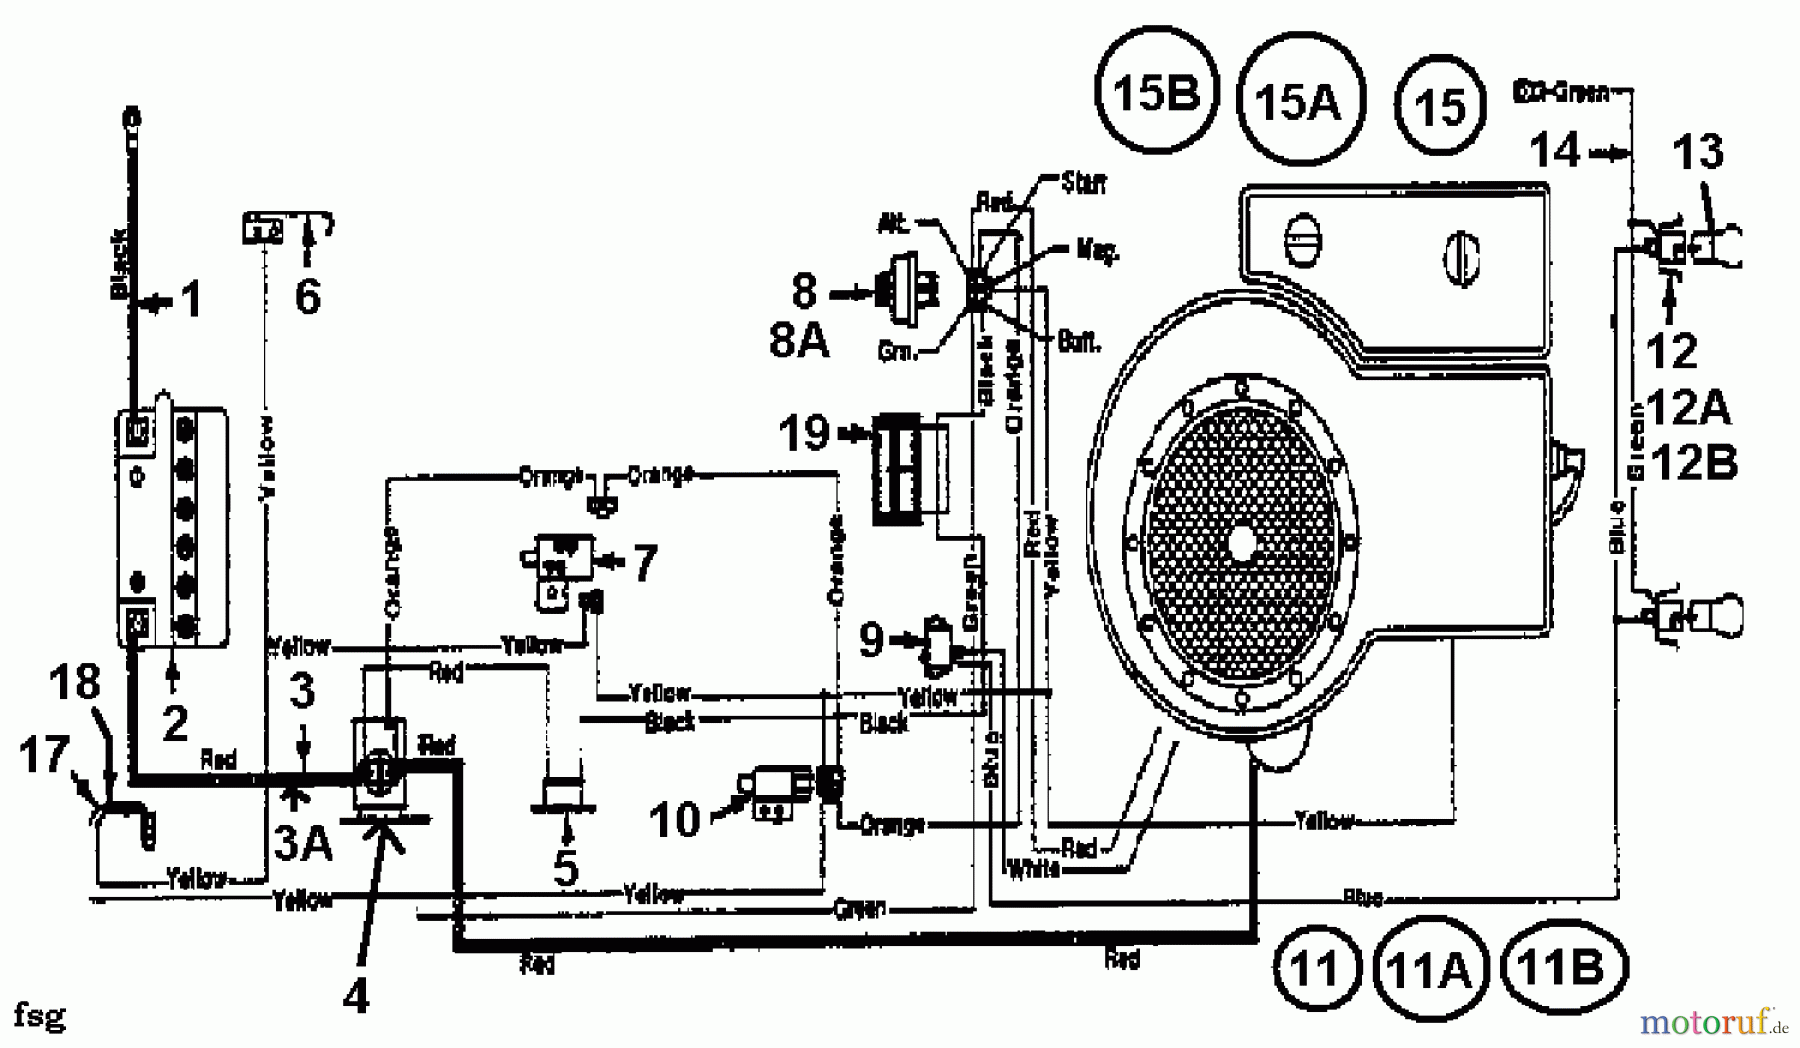  Motec Lawn tractors GT 12 LR 132-451E632  (1992) Wiring diagram single cylinder